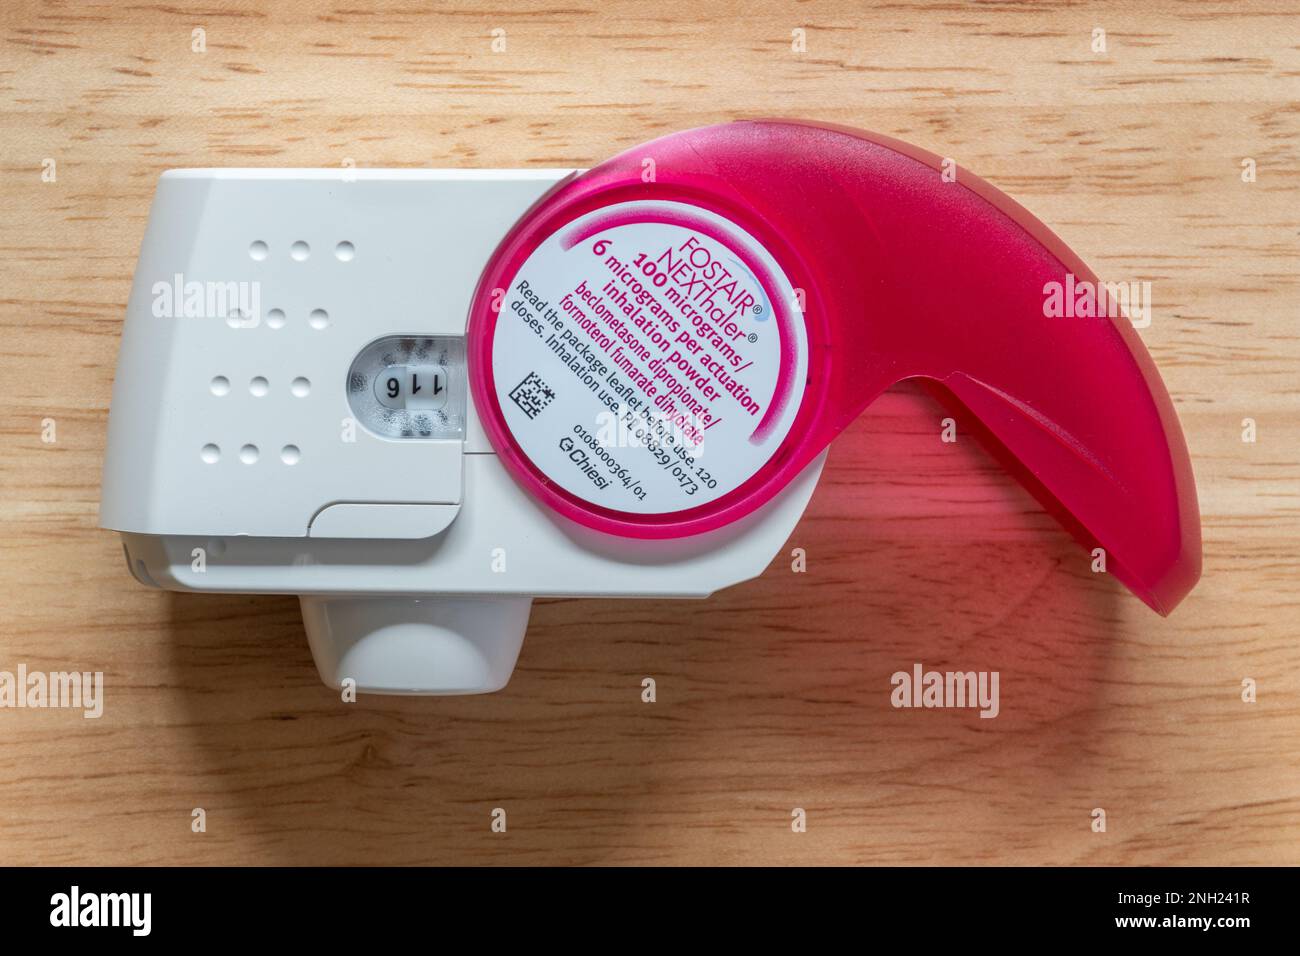 Photograph of an inhaler for medical treatment of asthma, Fostair NEXThaler Stock Photo